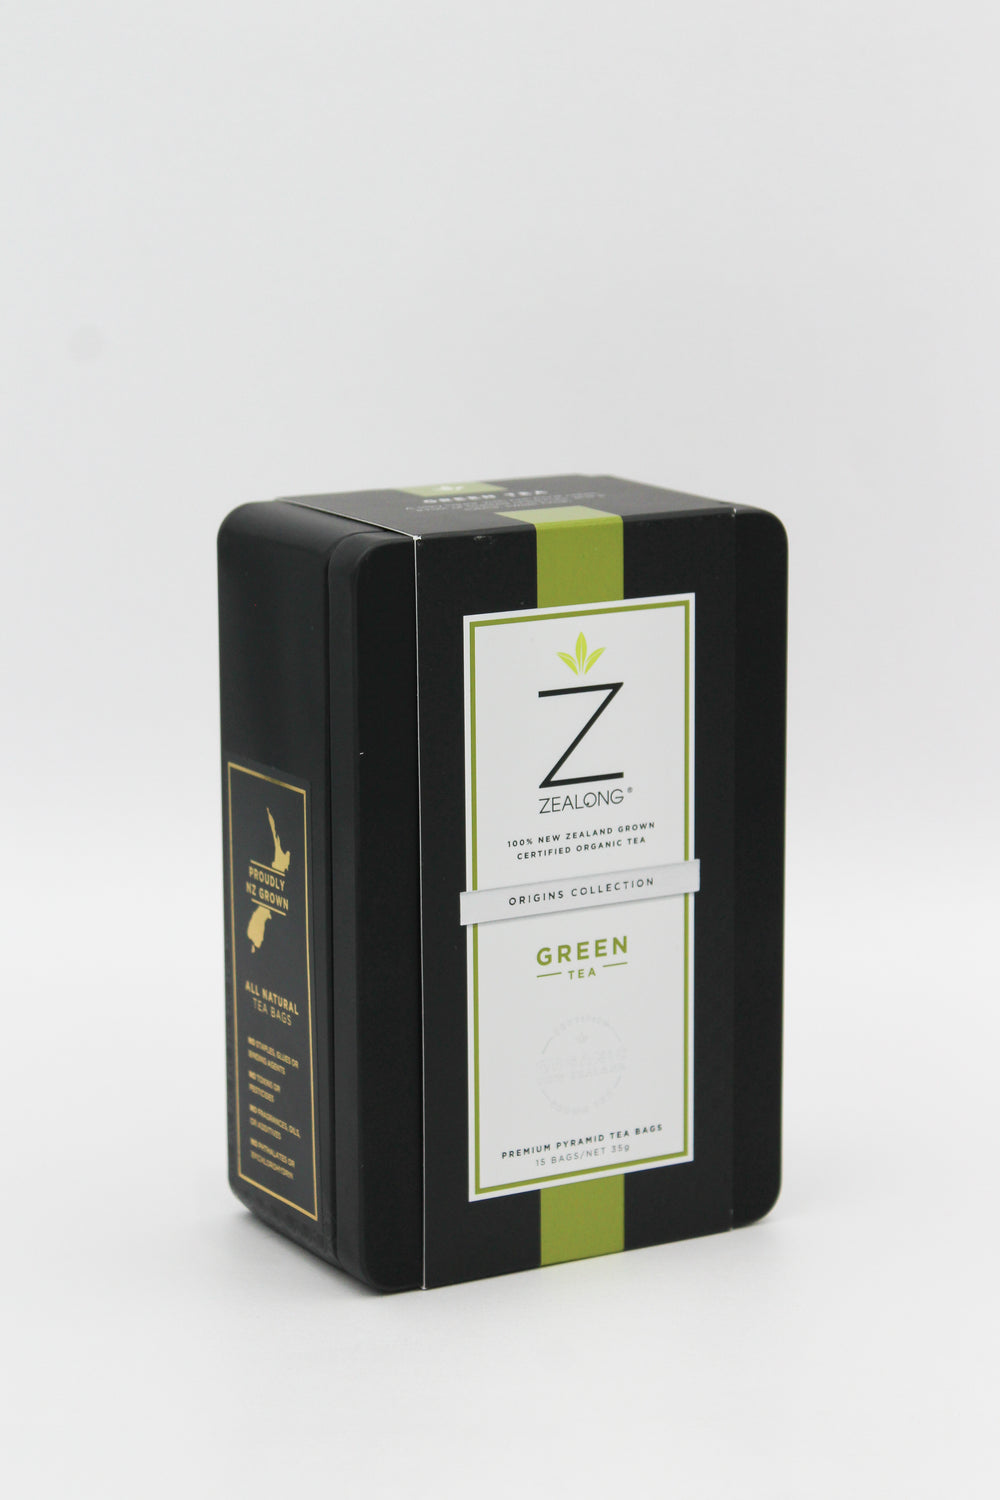 Zealong Green Tea